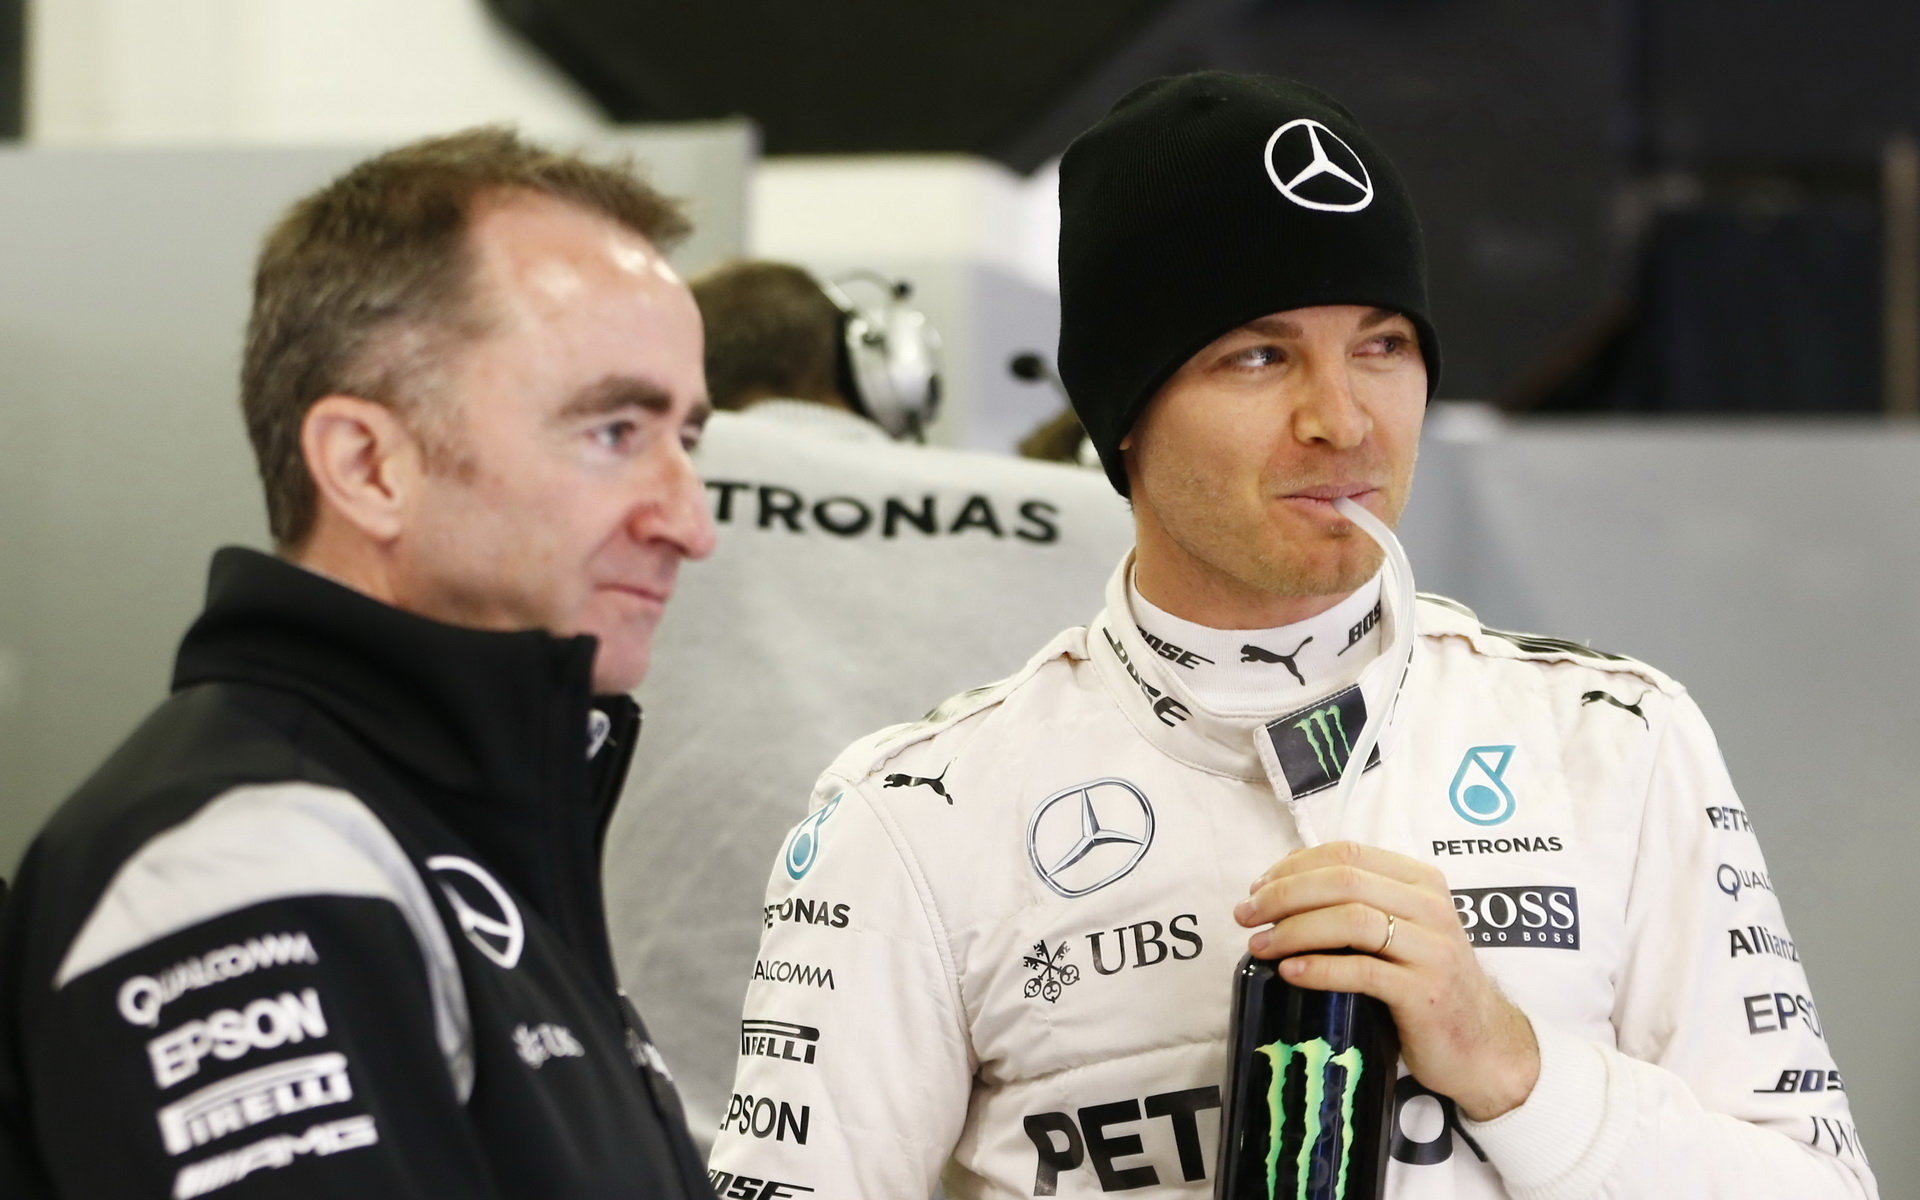 Nico Rosberg a Paddy Lowe